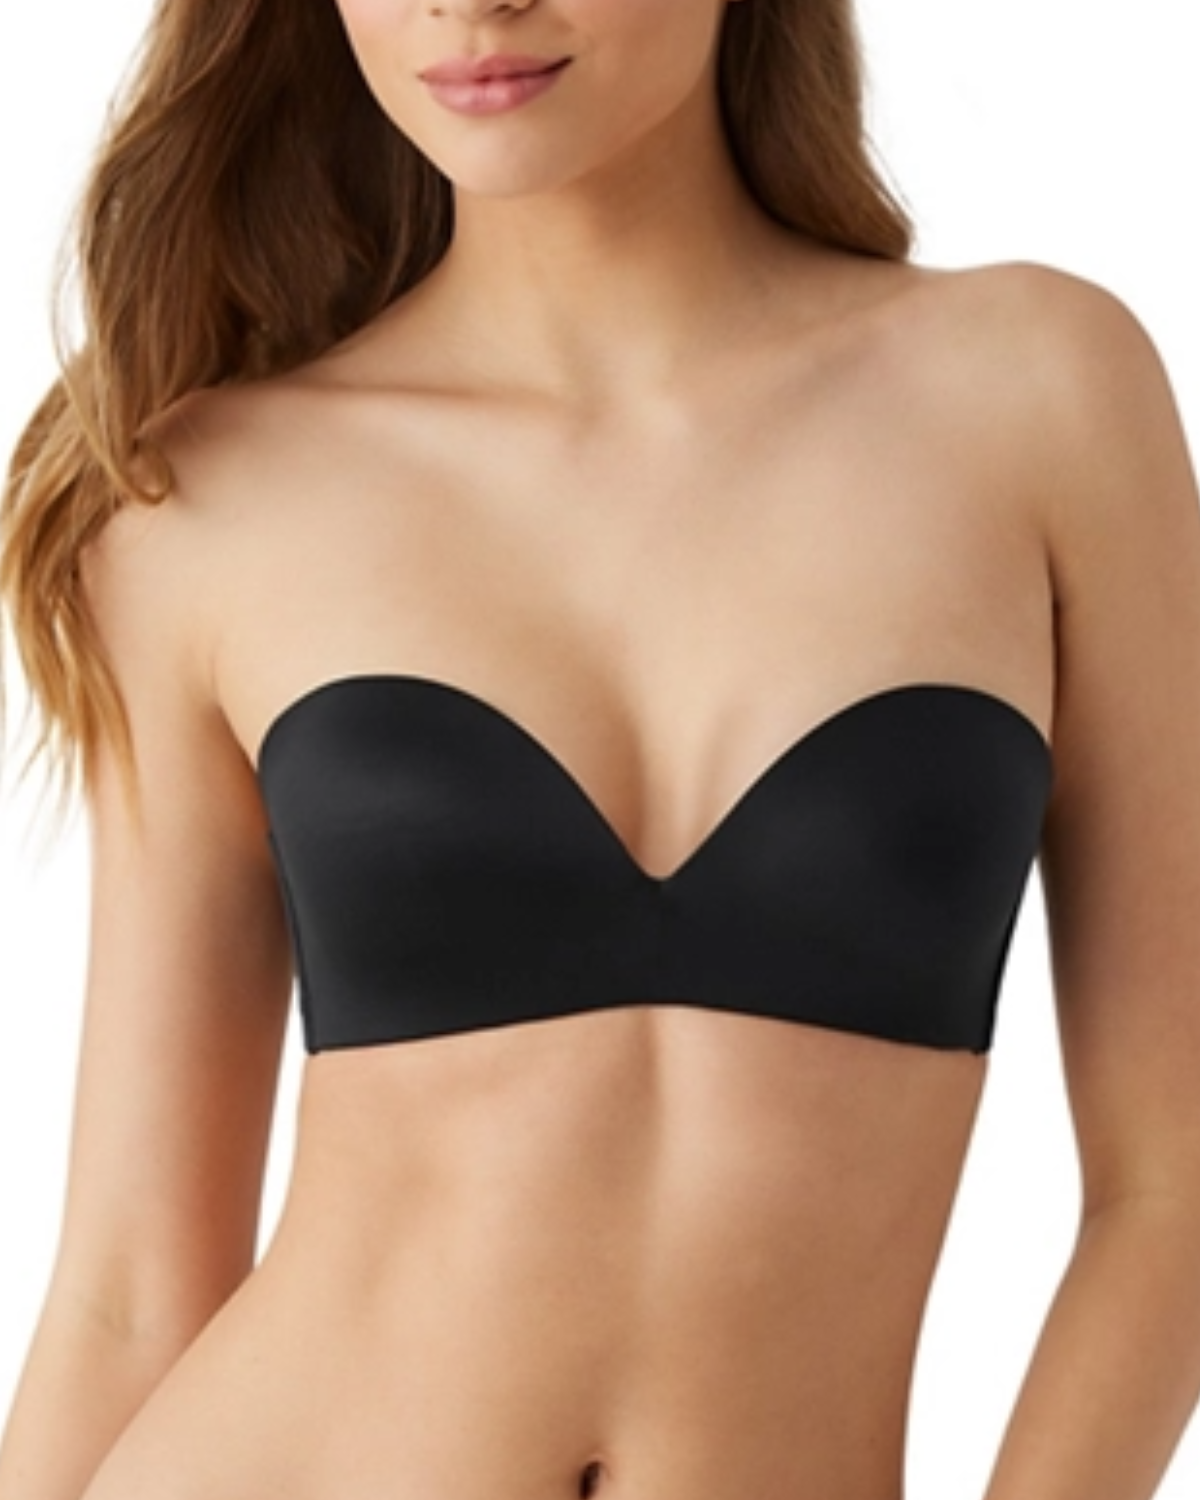 Model wearing a molded wire-free strapless bra in black